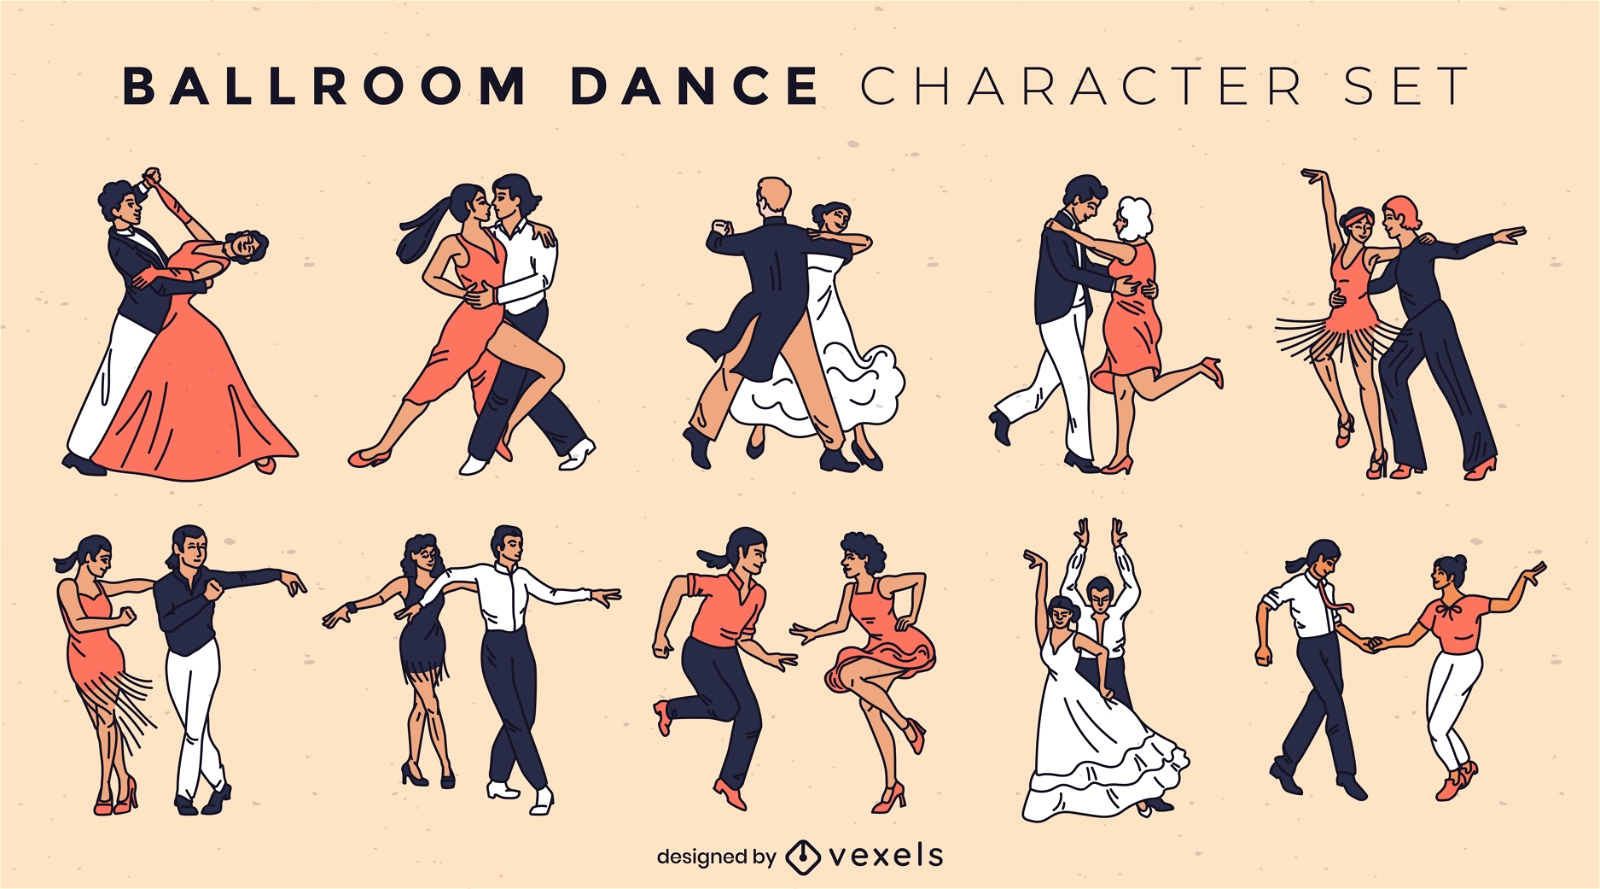 Ballroom dance characters set